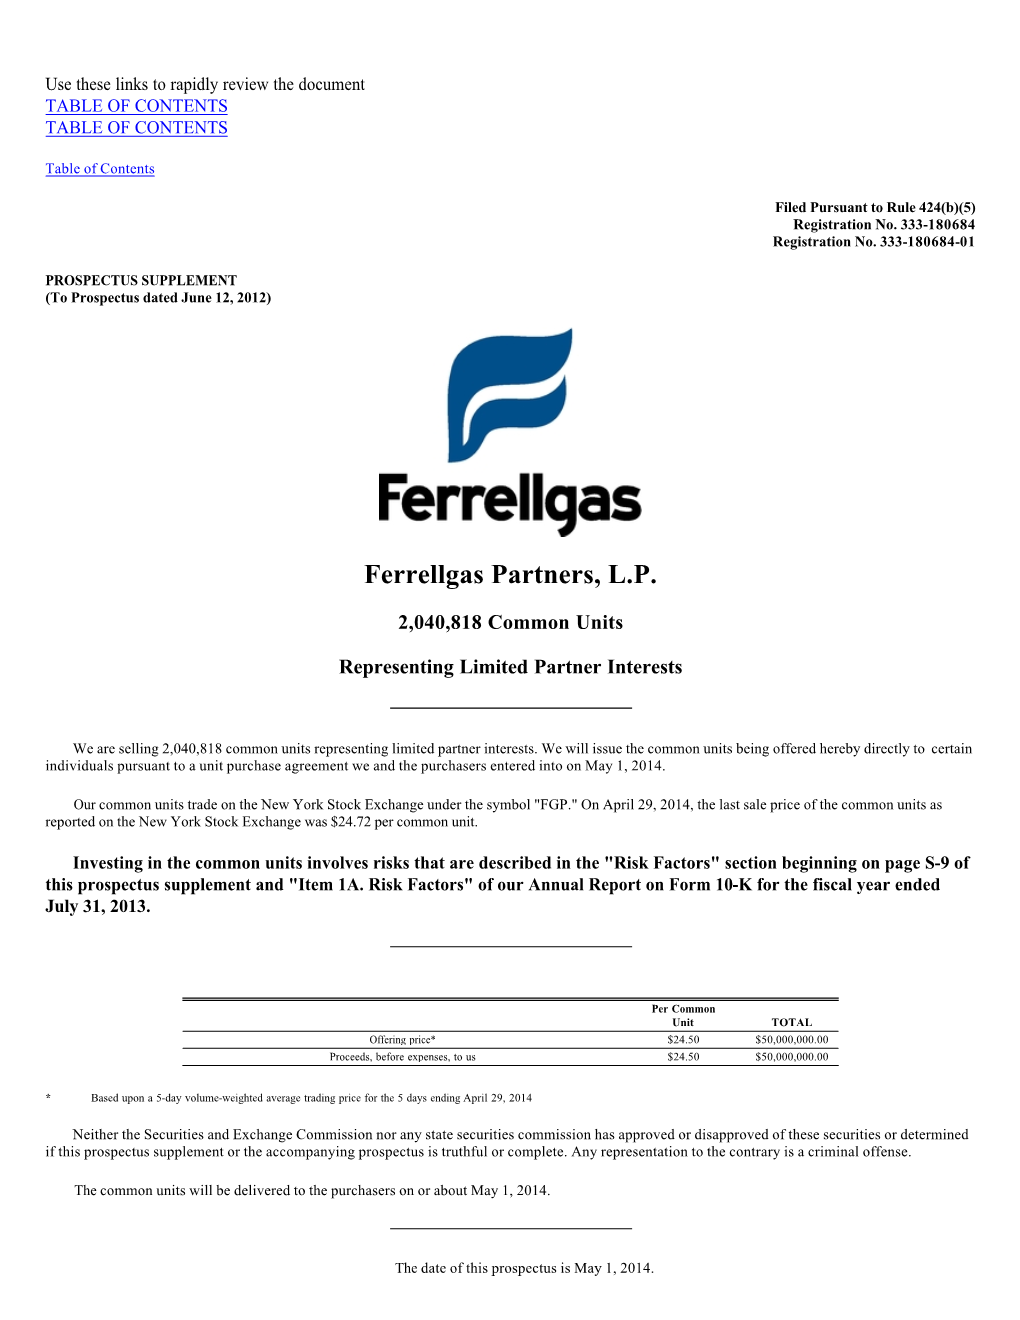 Ferrellgas Partners, L.P